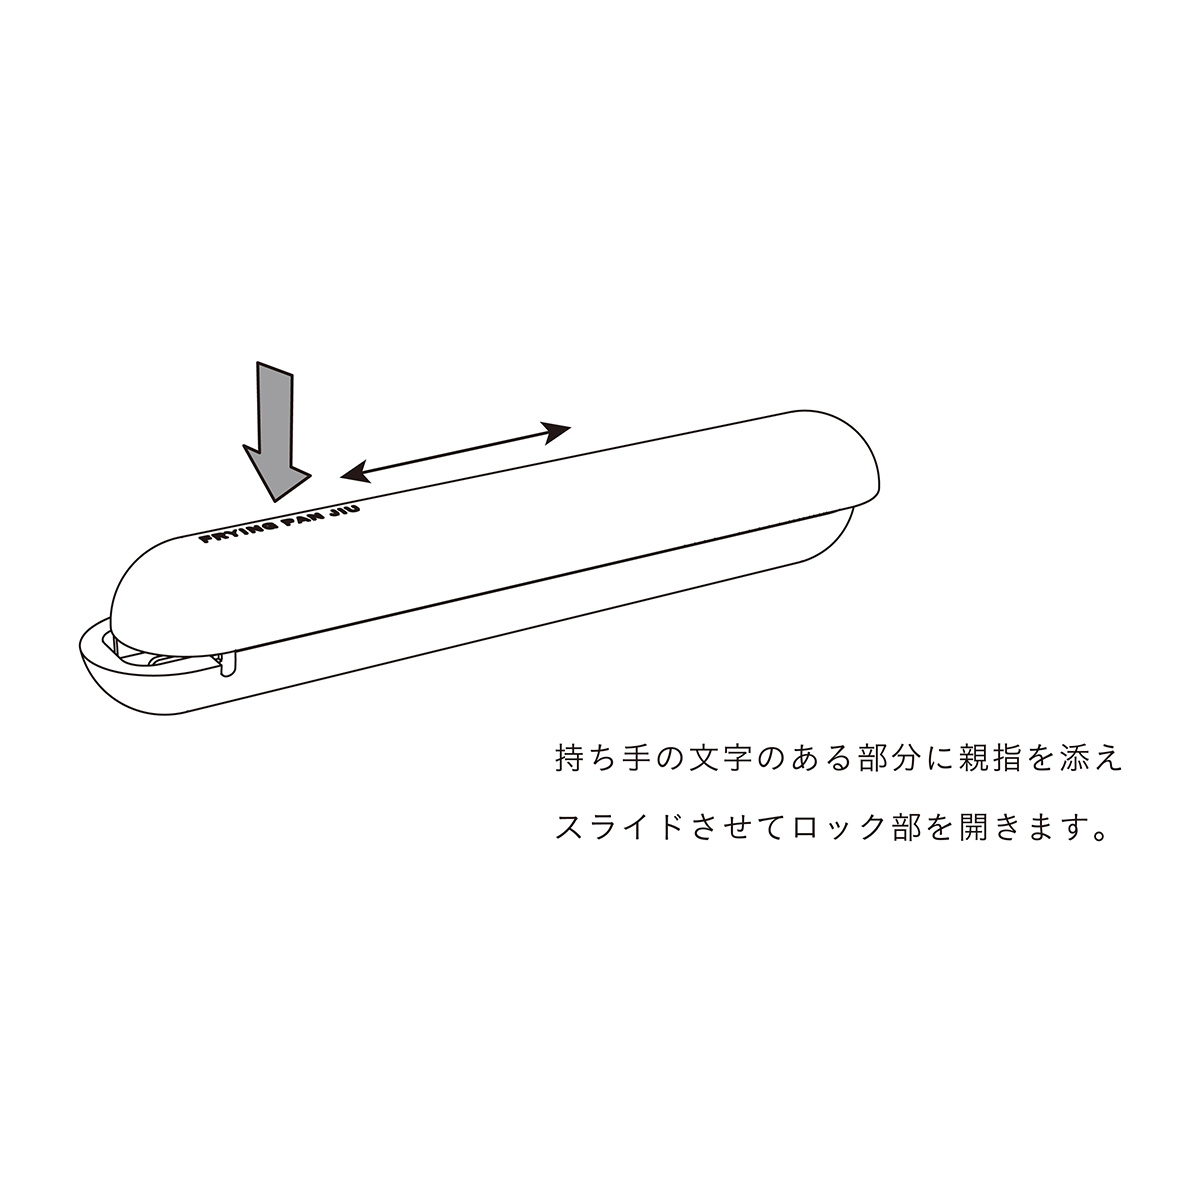 【FRYING PAN JIU】フライパンS+Mサイズ ハンドルセット ウォルナット